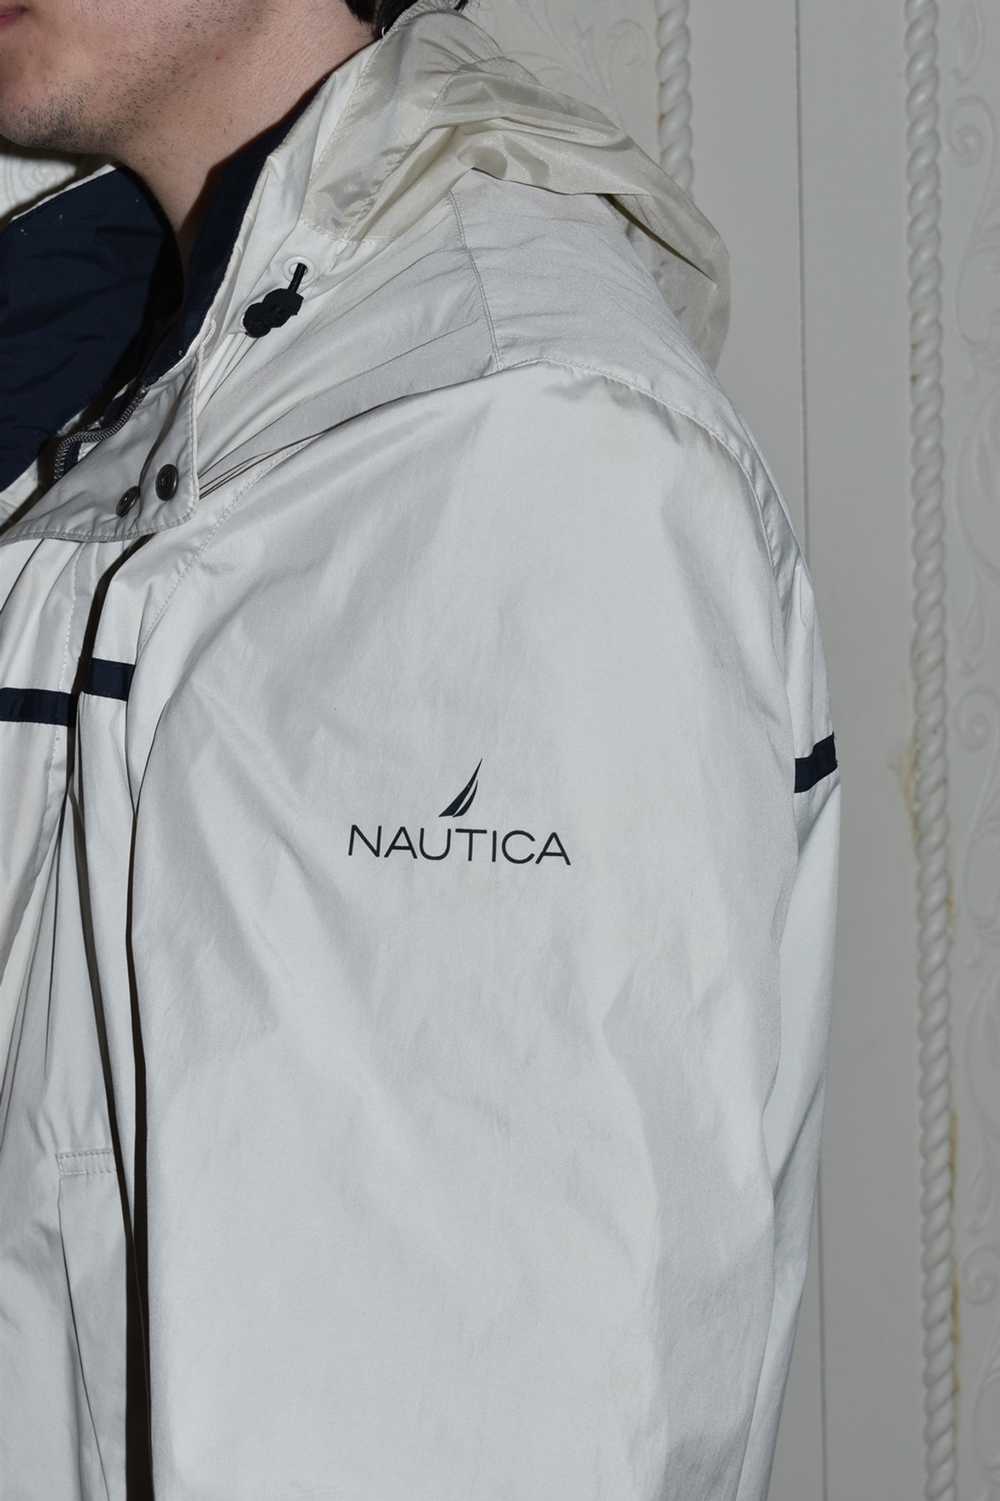 Nautica Nautica Bomber Jacket - image 2